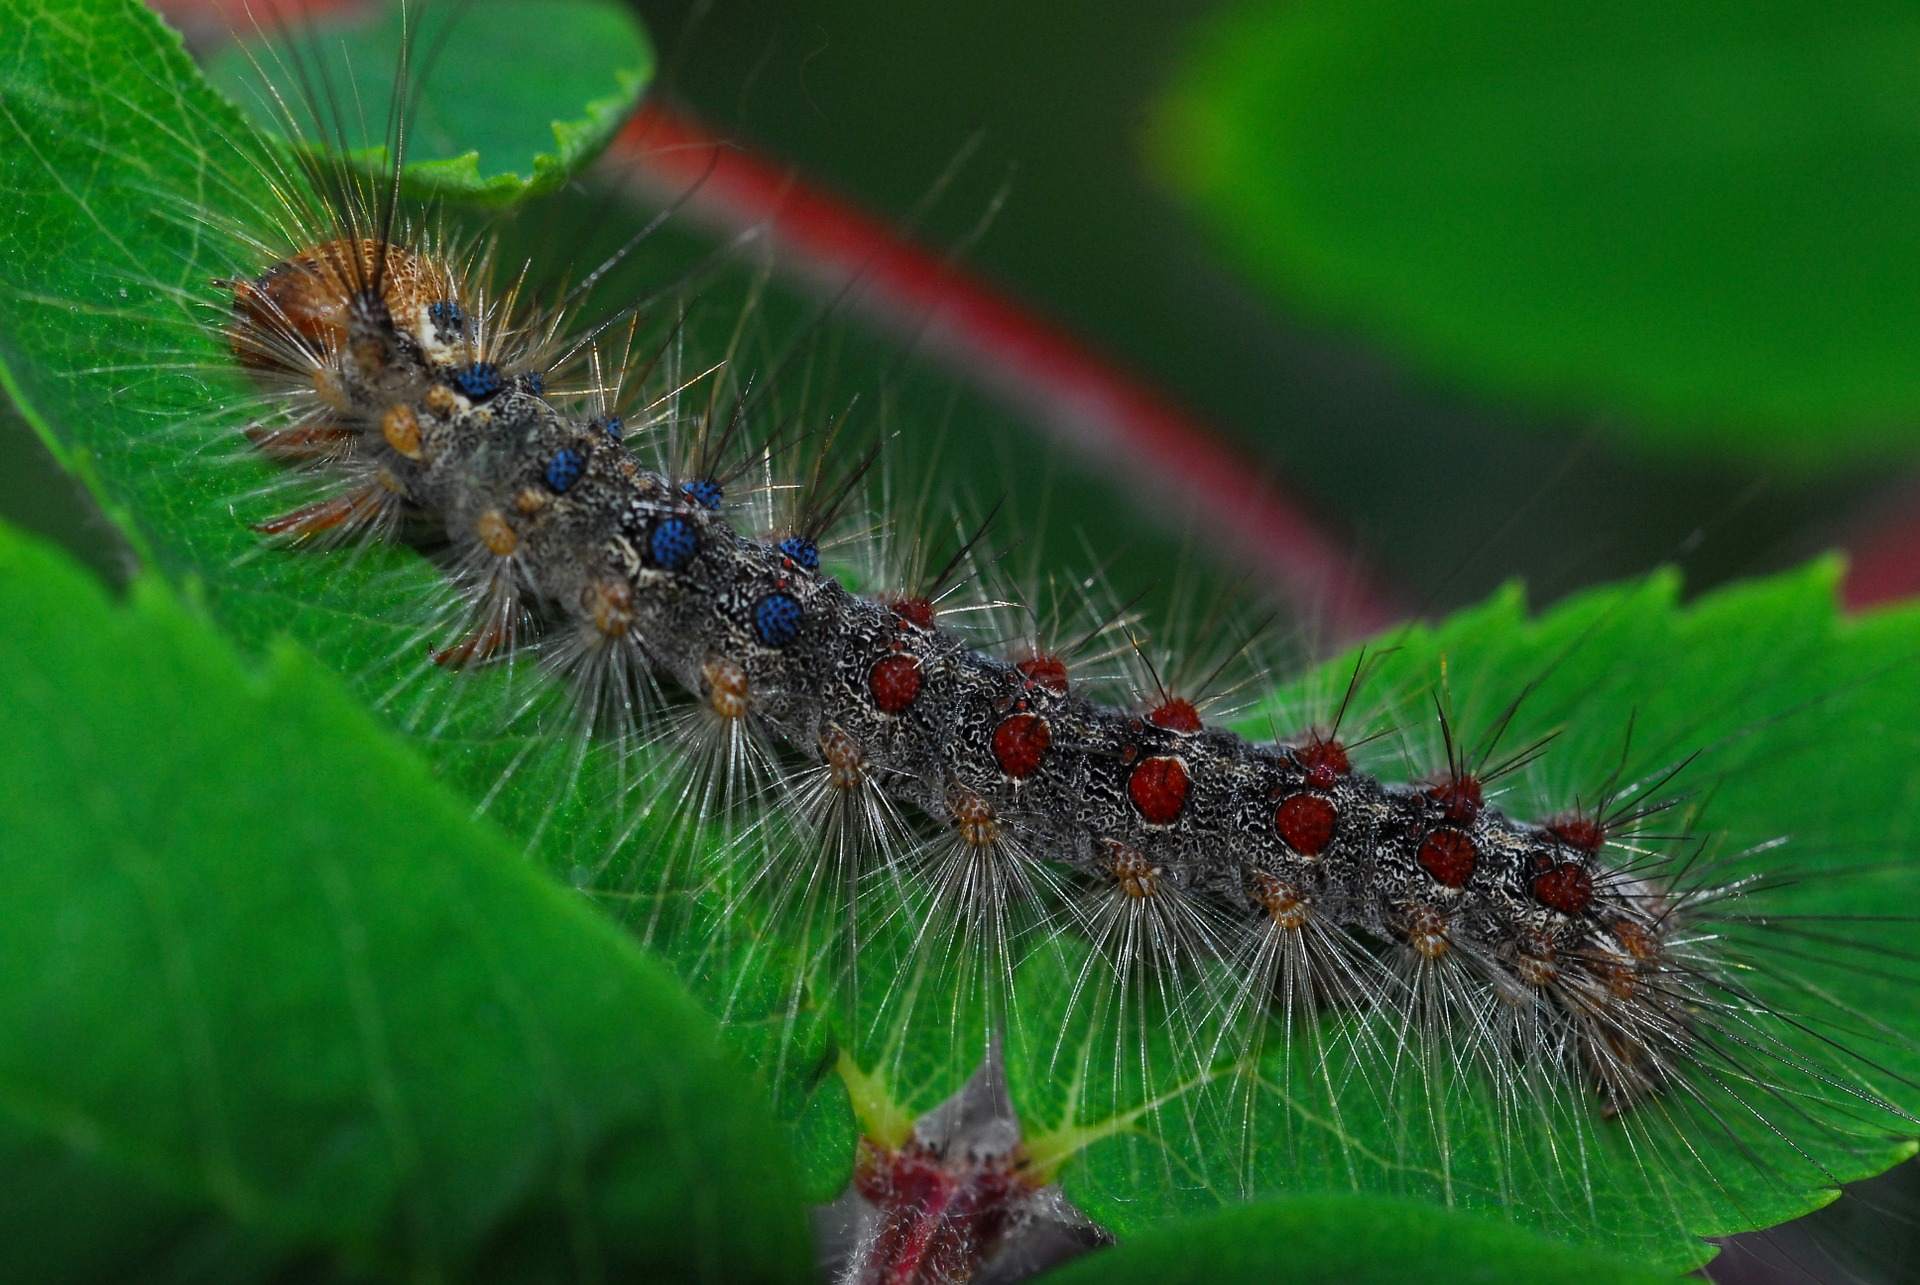 Gypsy moth caterpillar. (Photo courtesy of Pixabay)